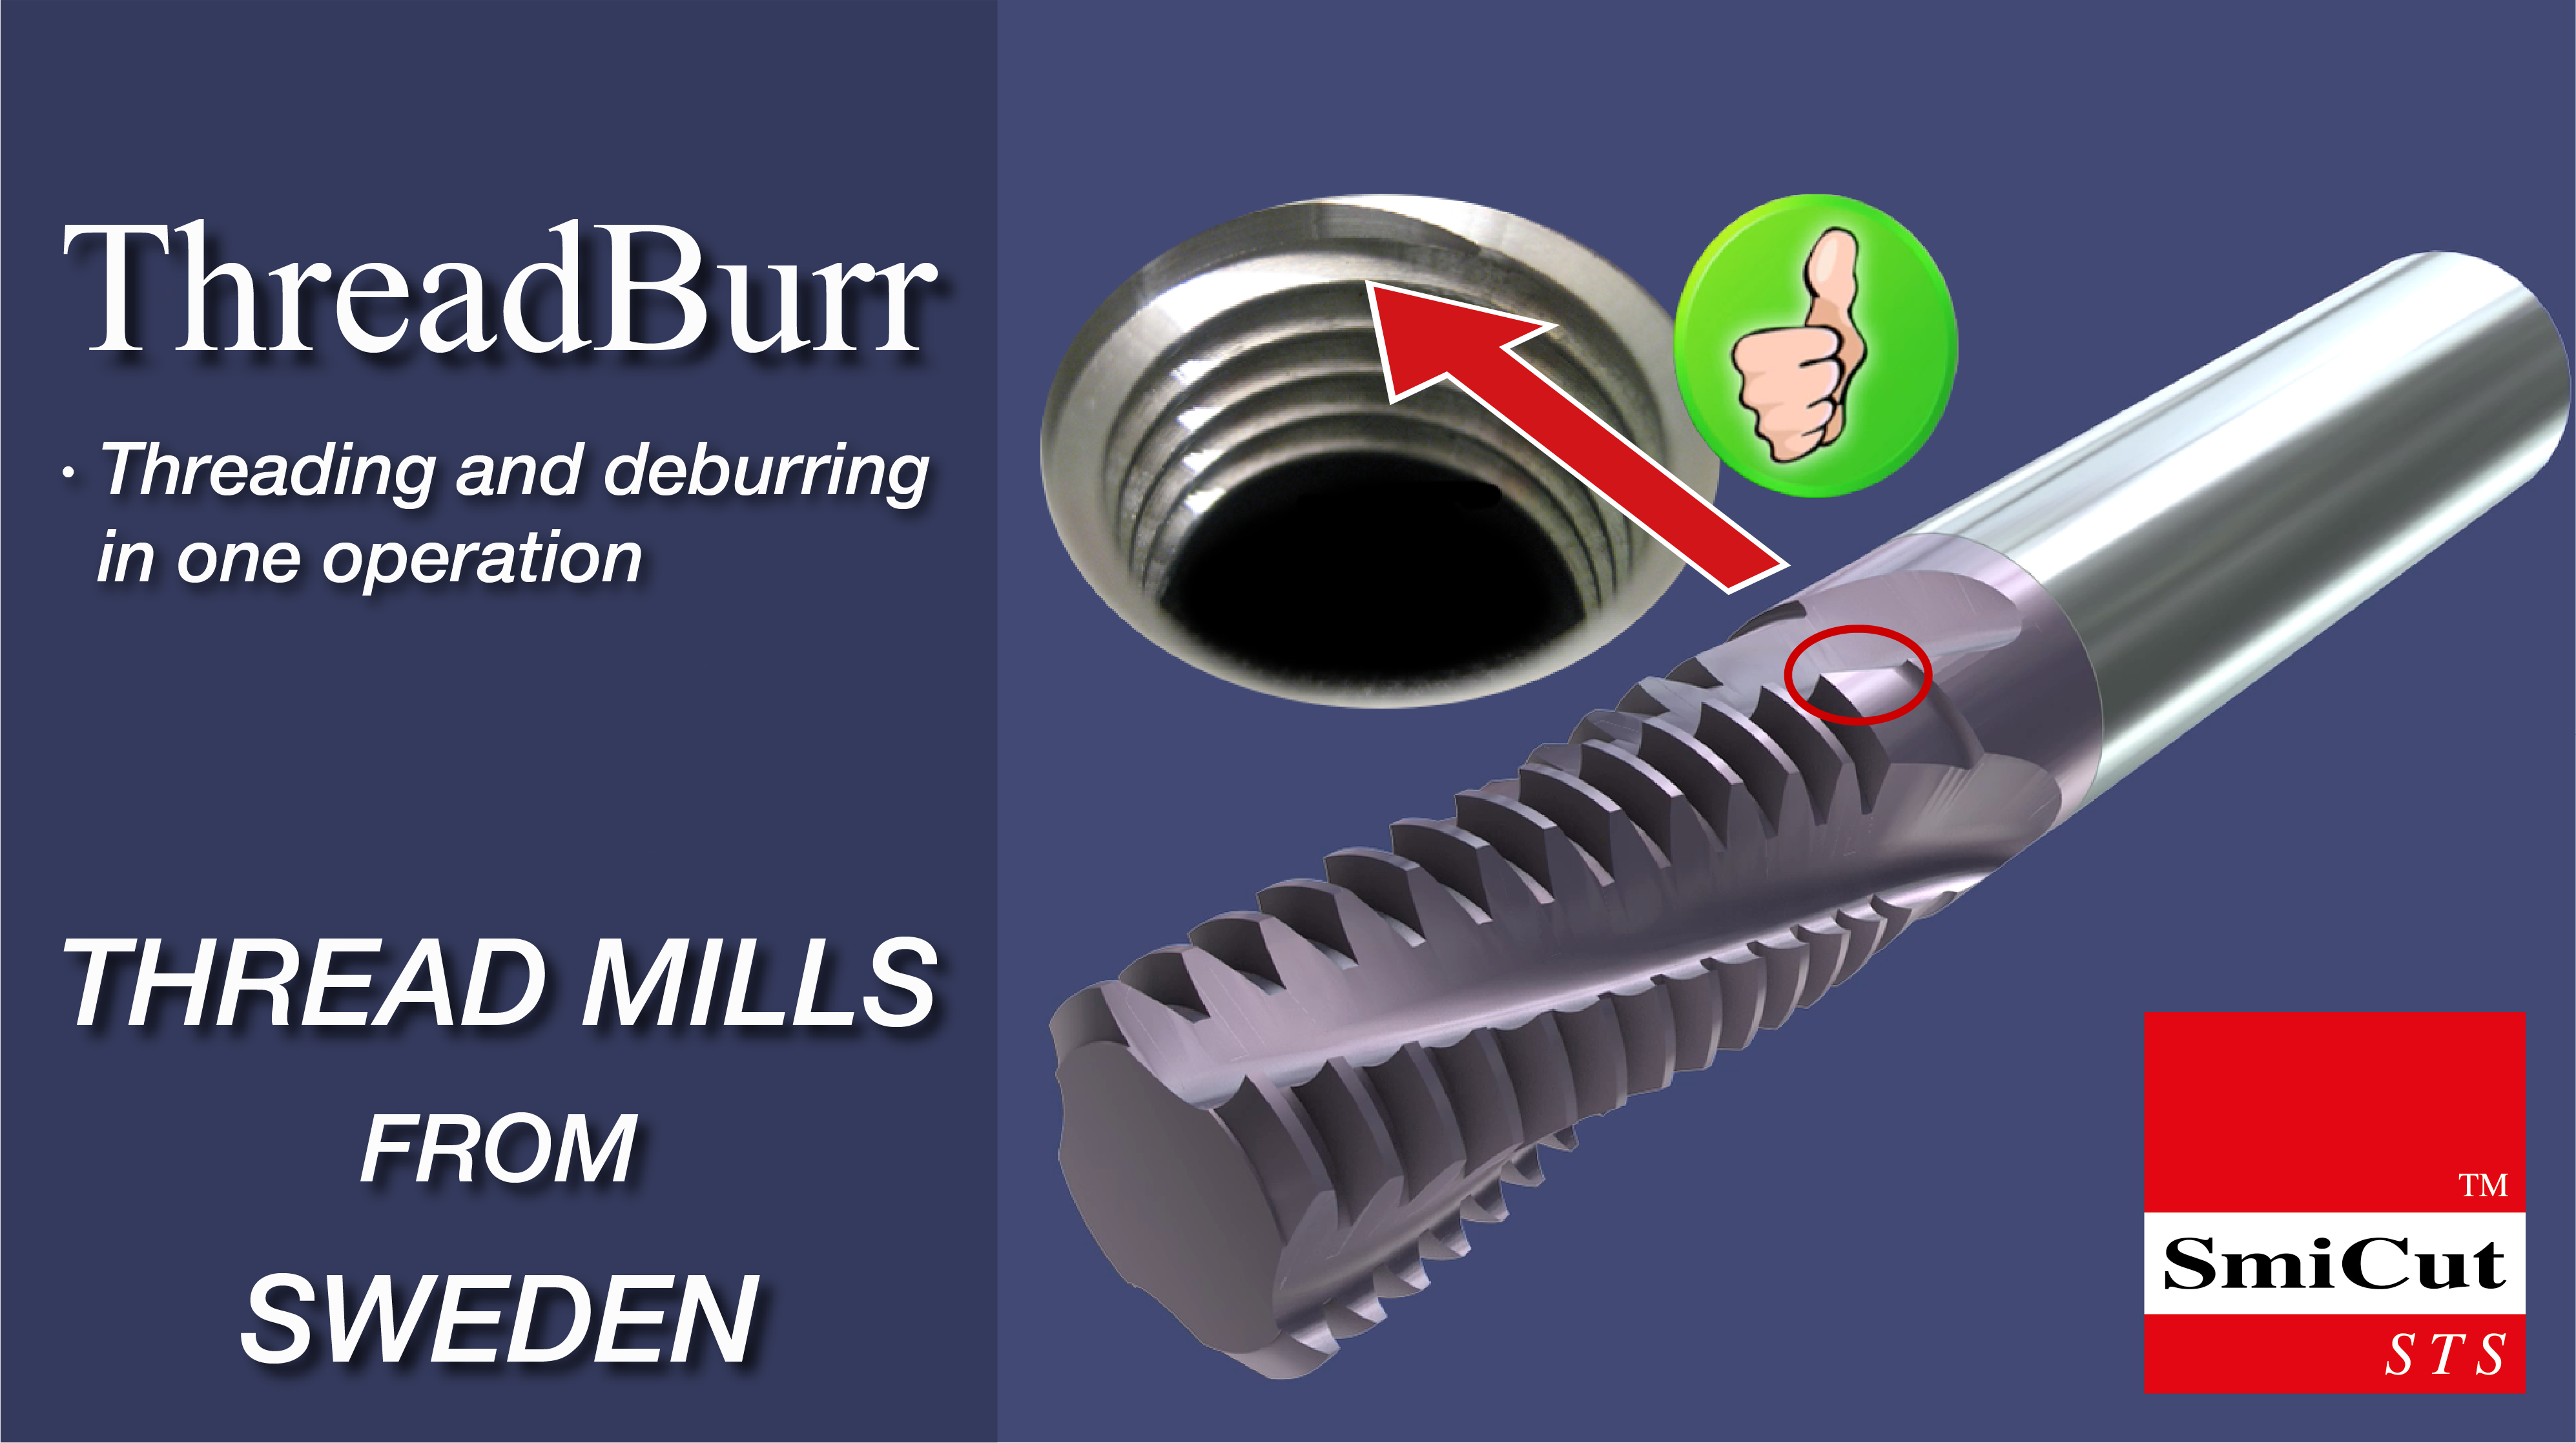 ThreadBurr – Solid Carbide Thread Mills from SmiCut